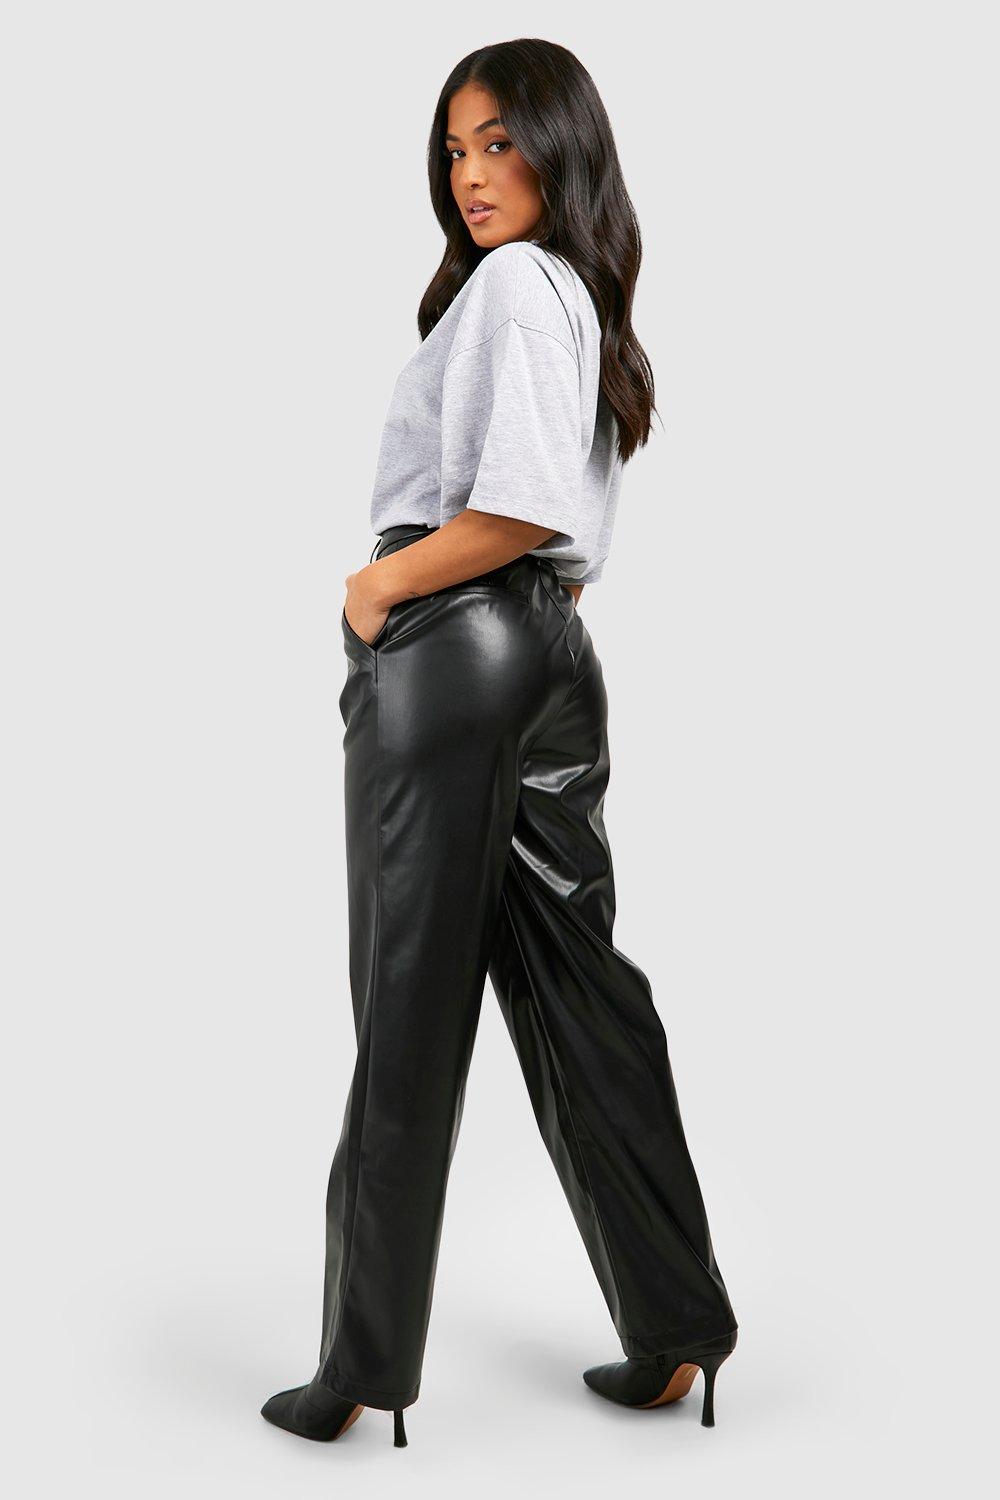 Black Tailored Straight Leg Pant - WOMEN Pants